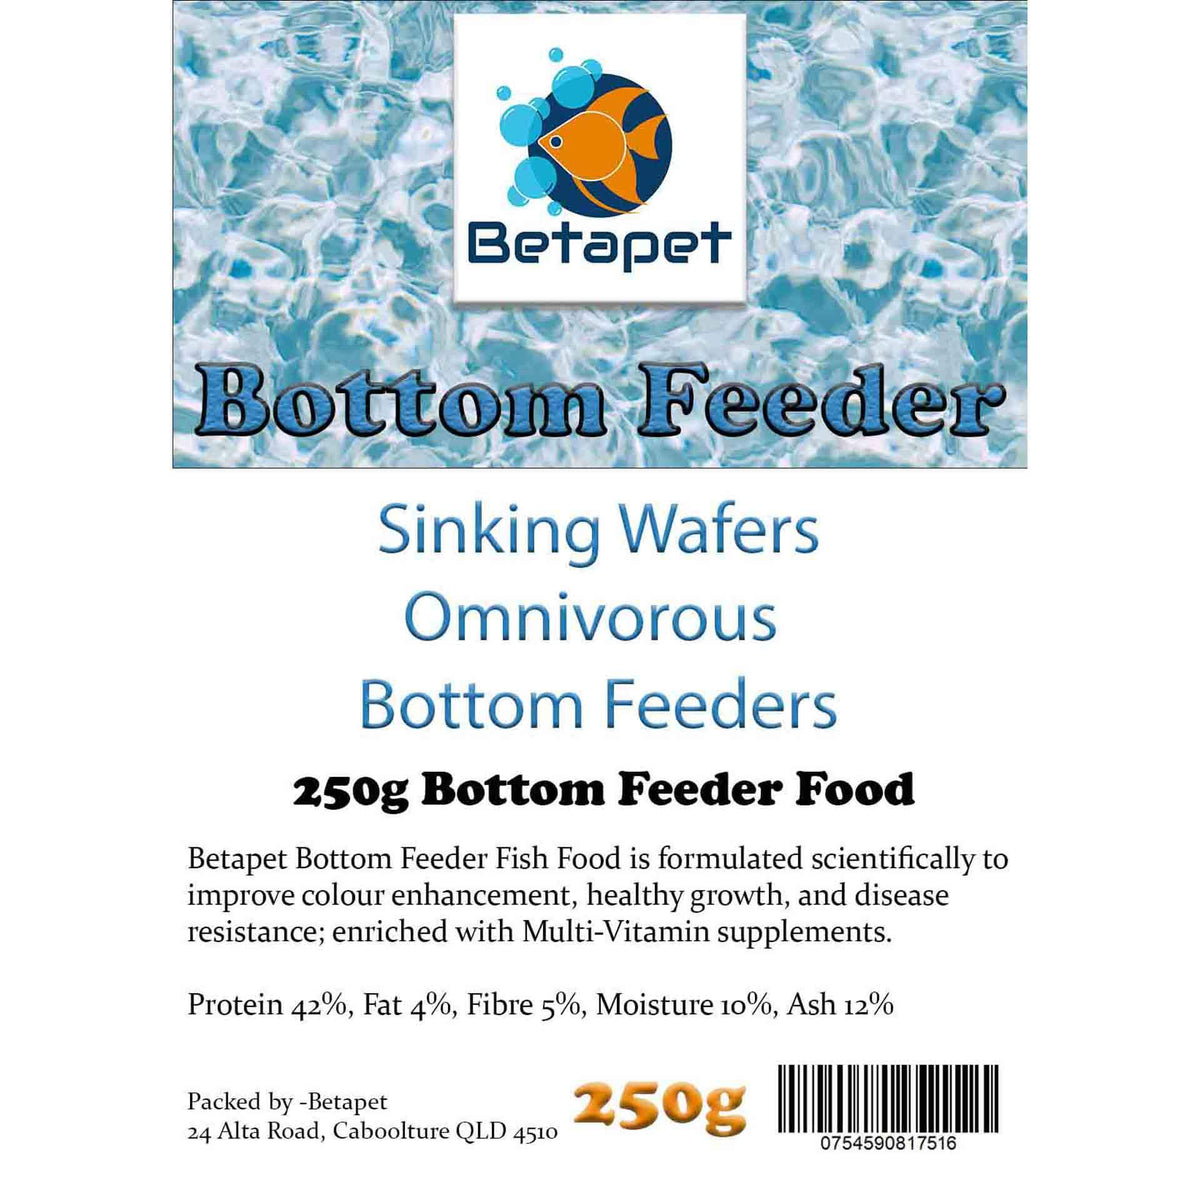 Betapet 250g Bottom Feeder Fish Food